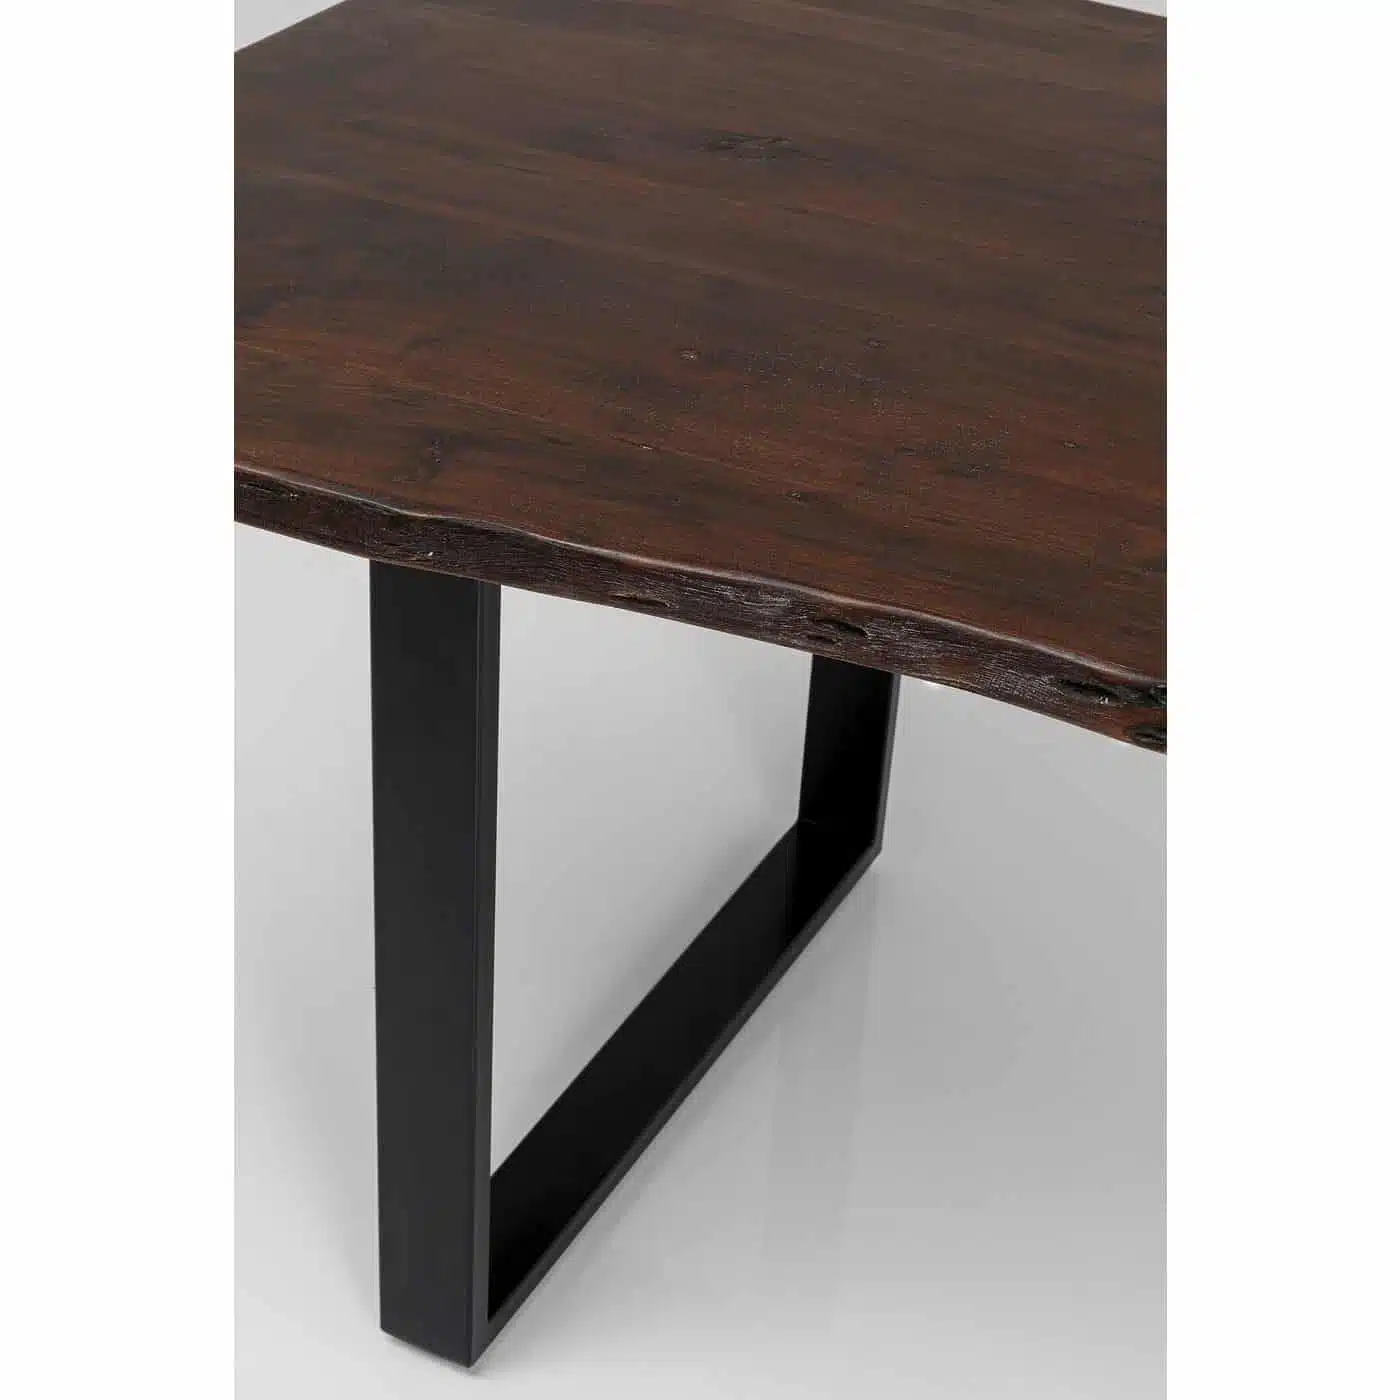 Table Harmony noyer noire 160x80cm Kare Design